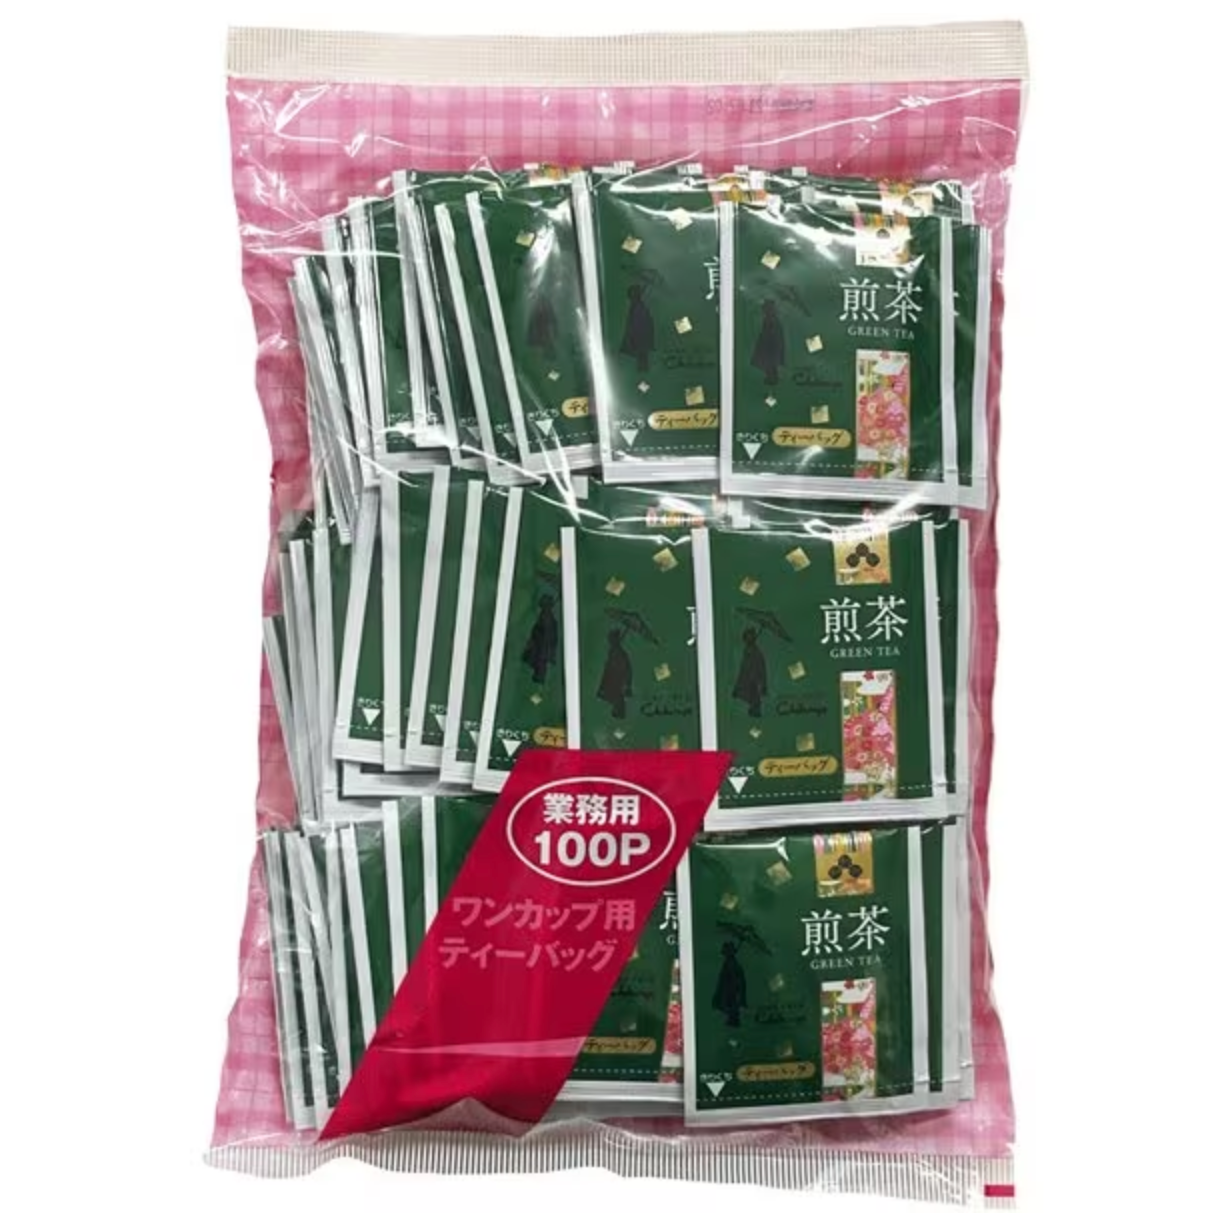 Chikiriya Uji Matcha Sencha tea bags 1.5g x 100